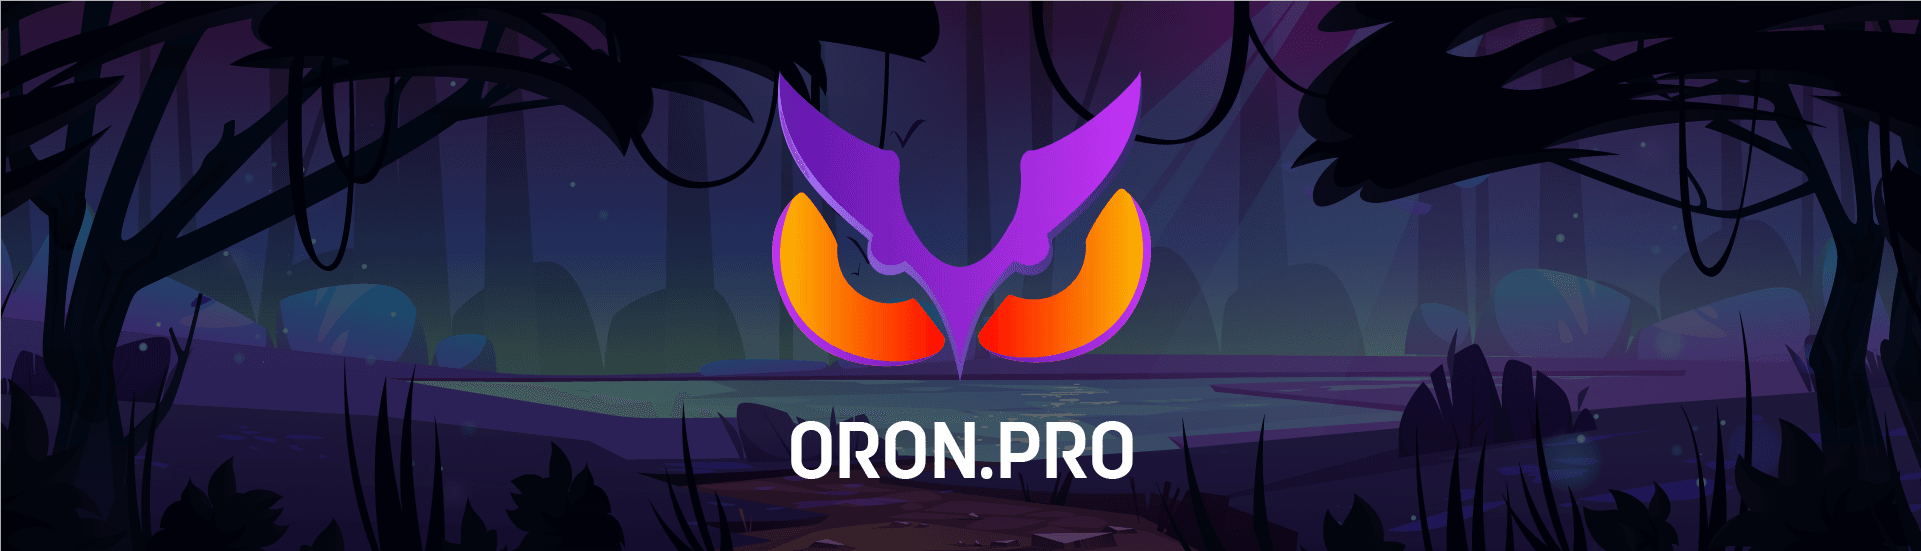 Oron_pro banner